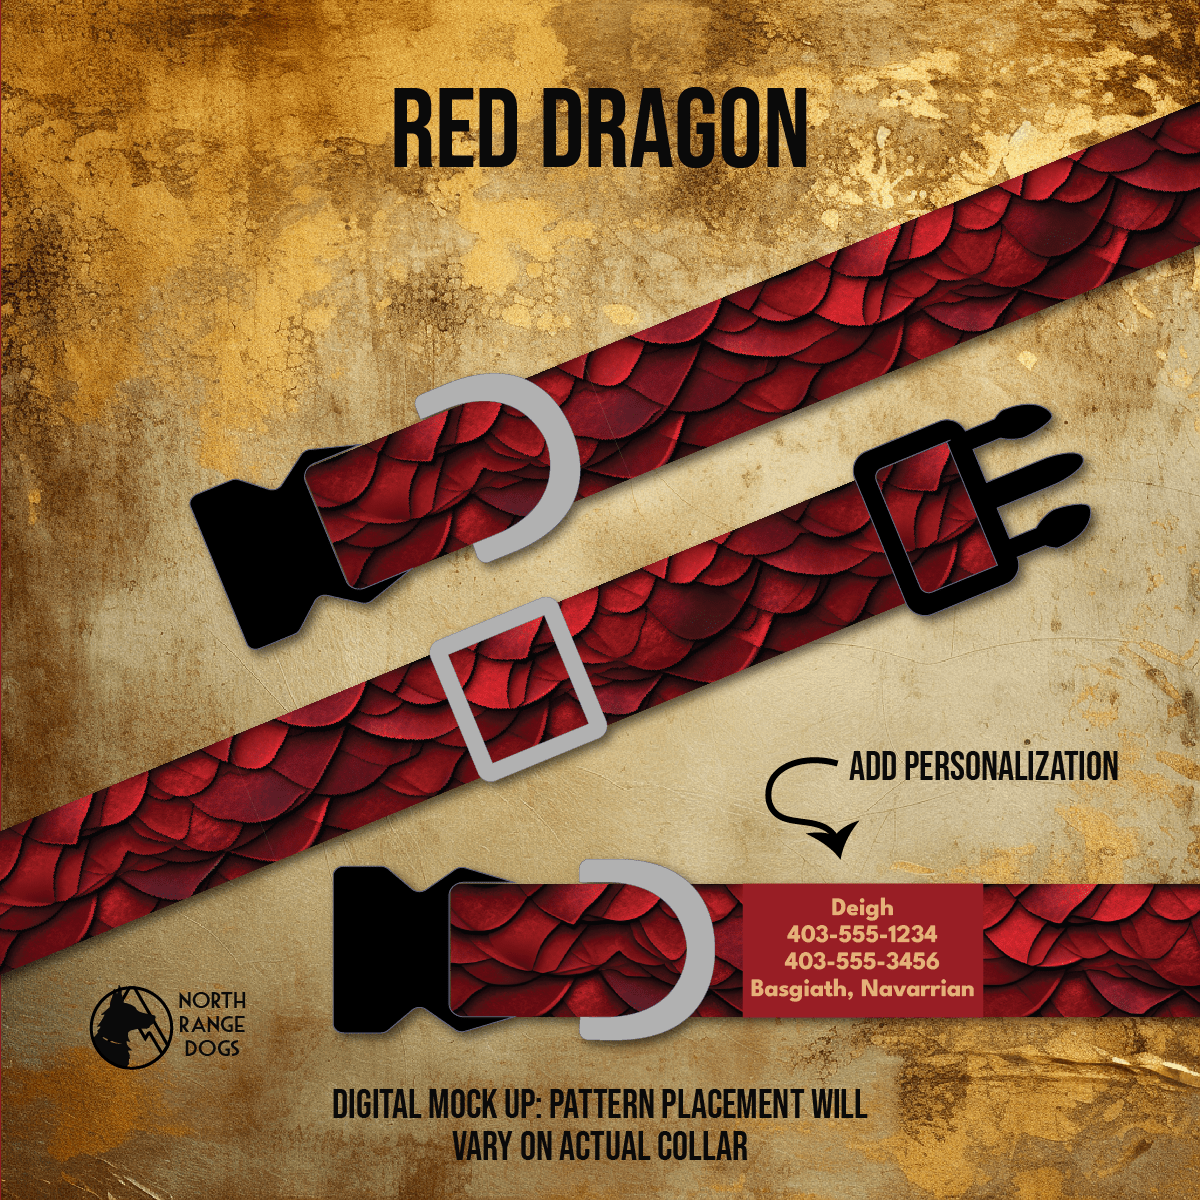 Red Dragon Dog Collar - North Range Dogs